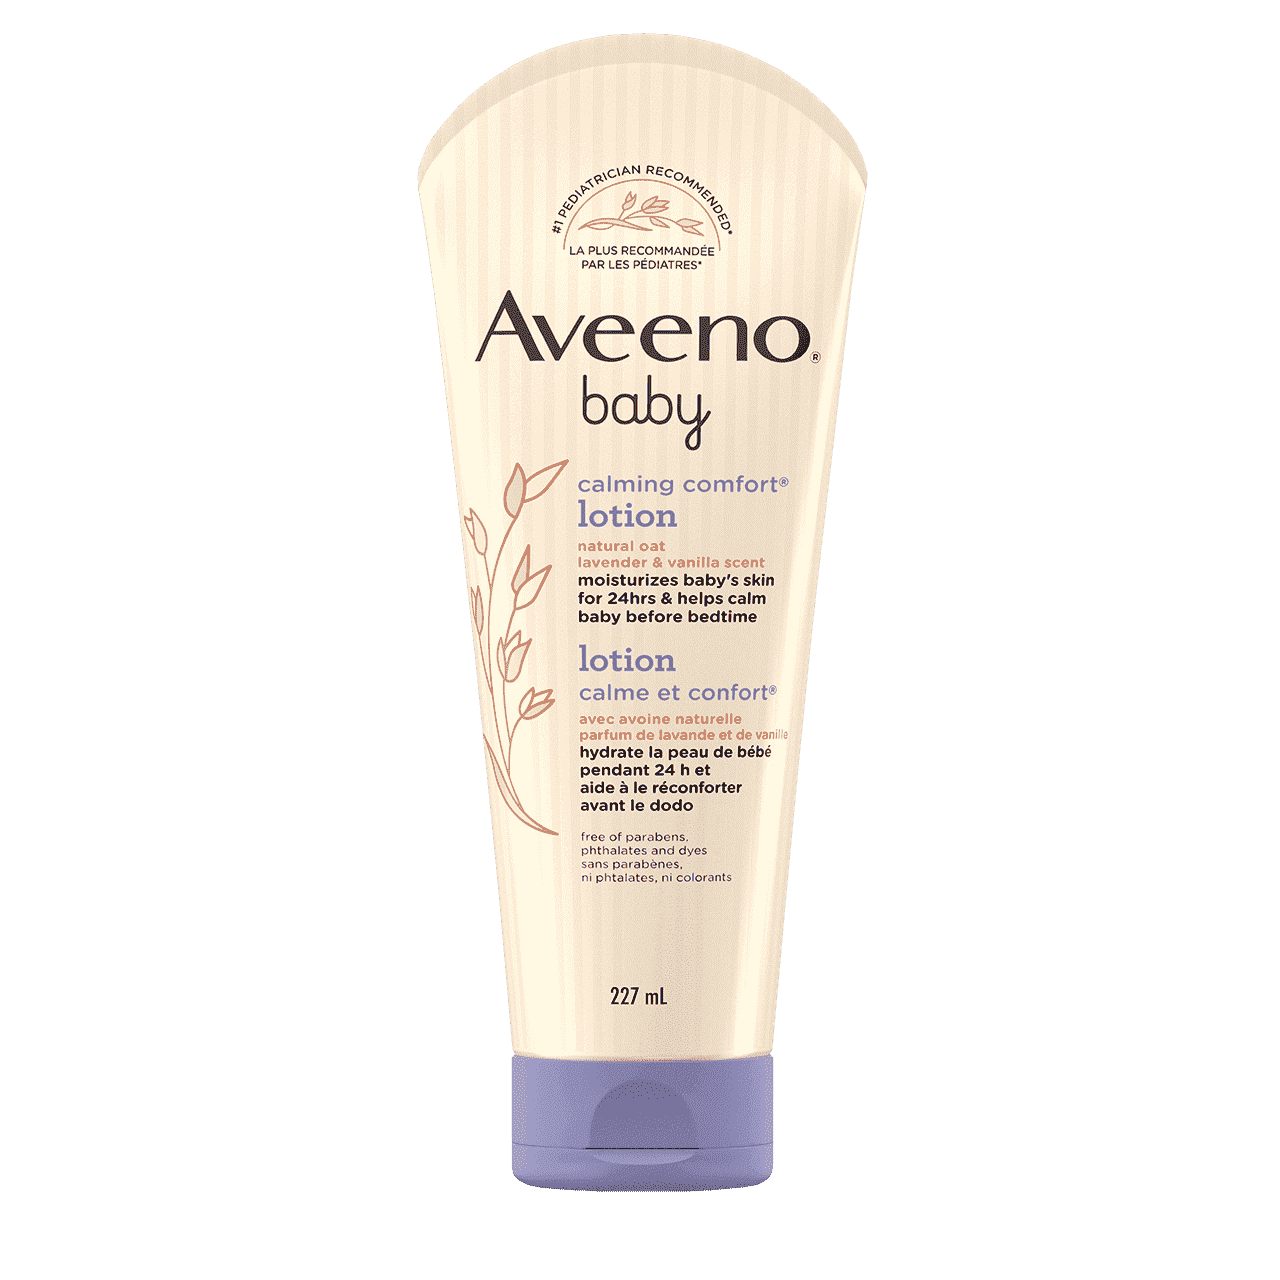 227ml of Aveeno Baby Calming Comfort lotion